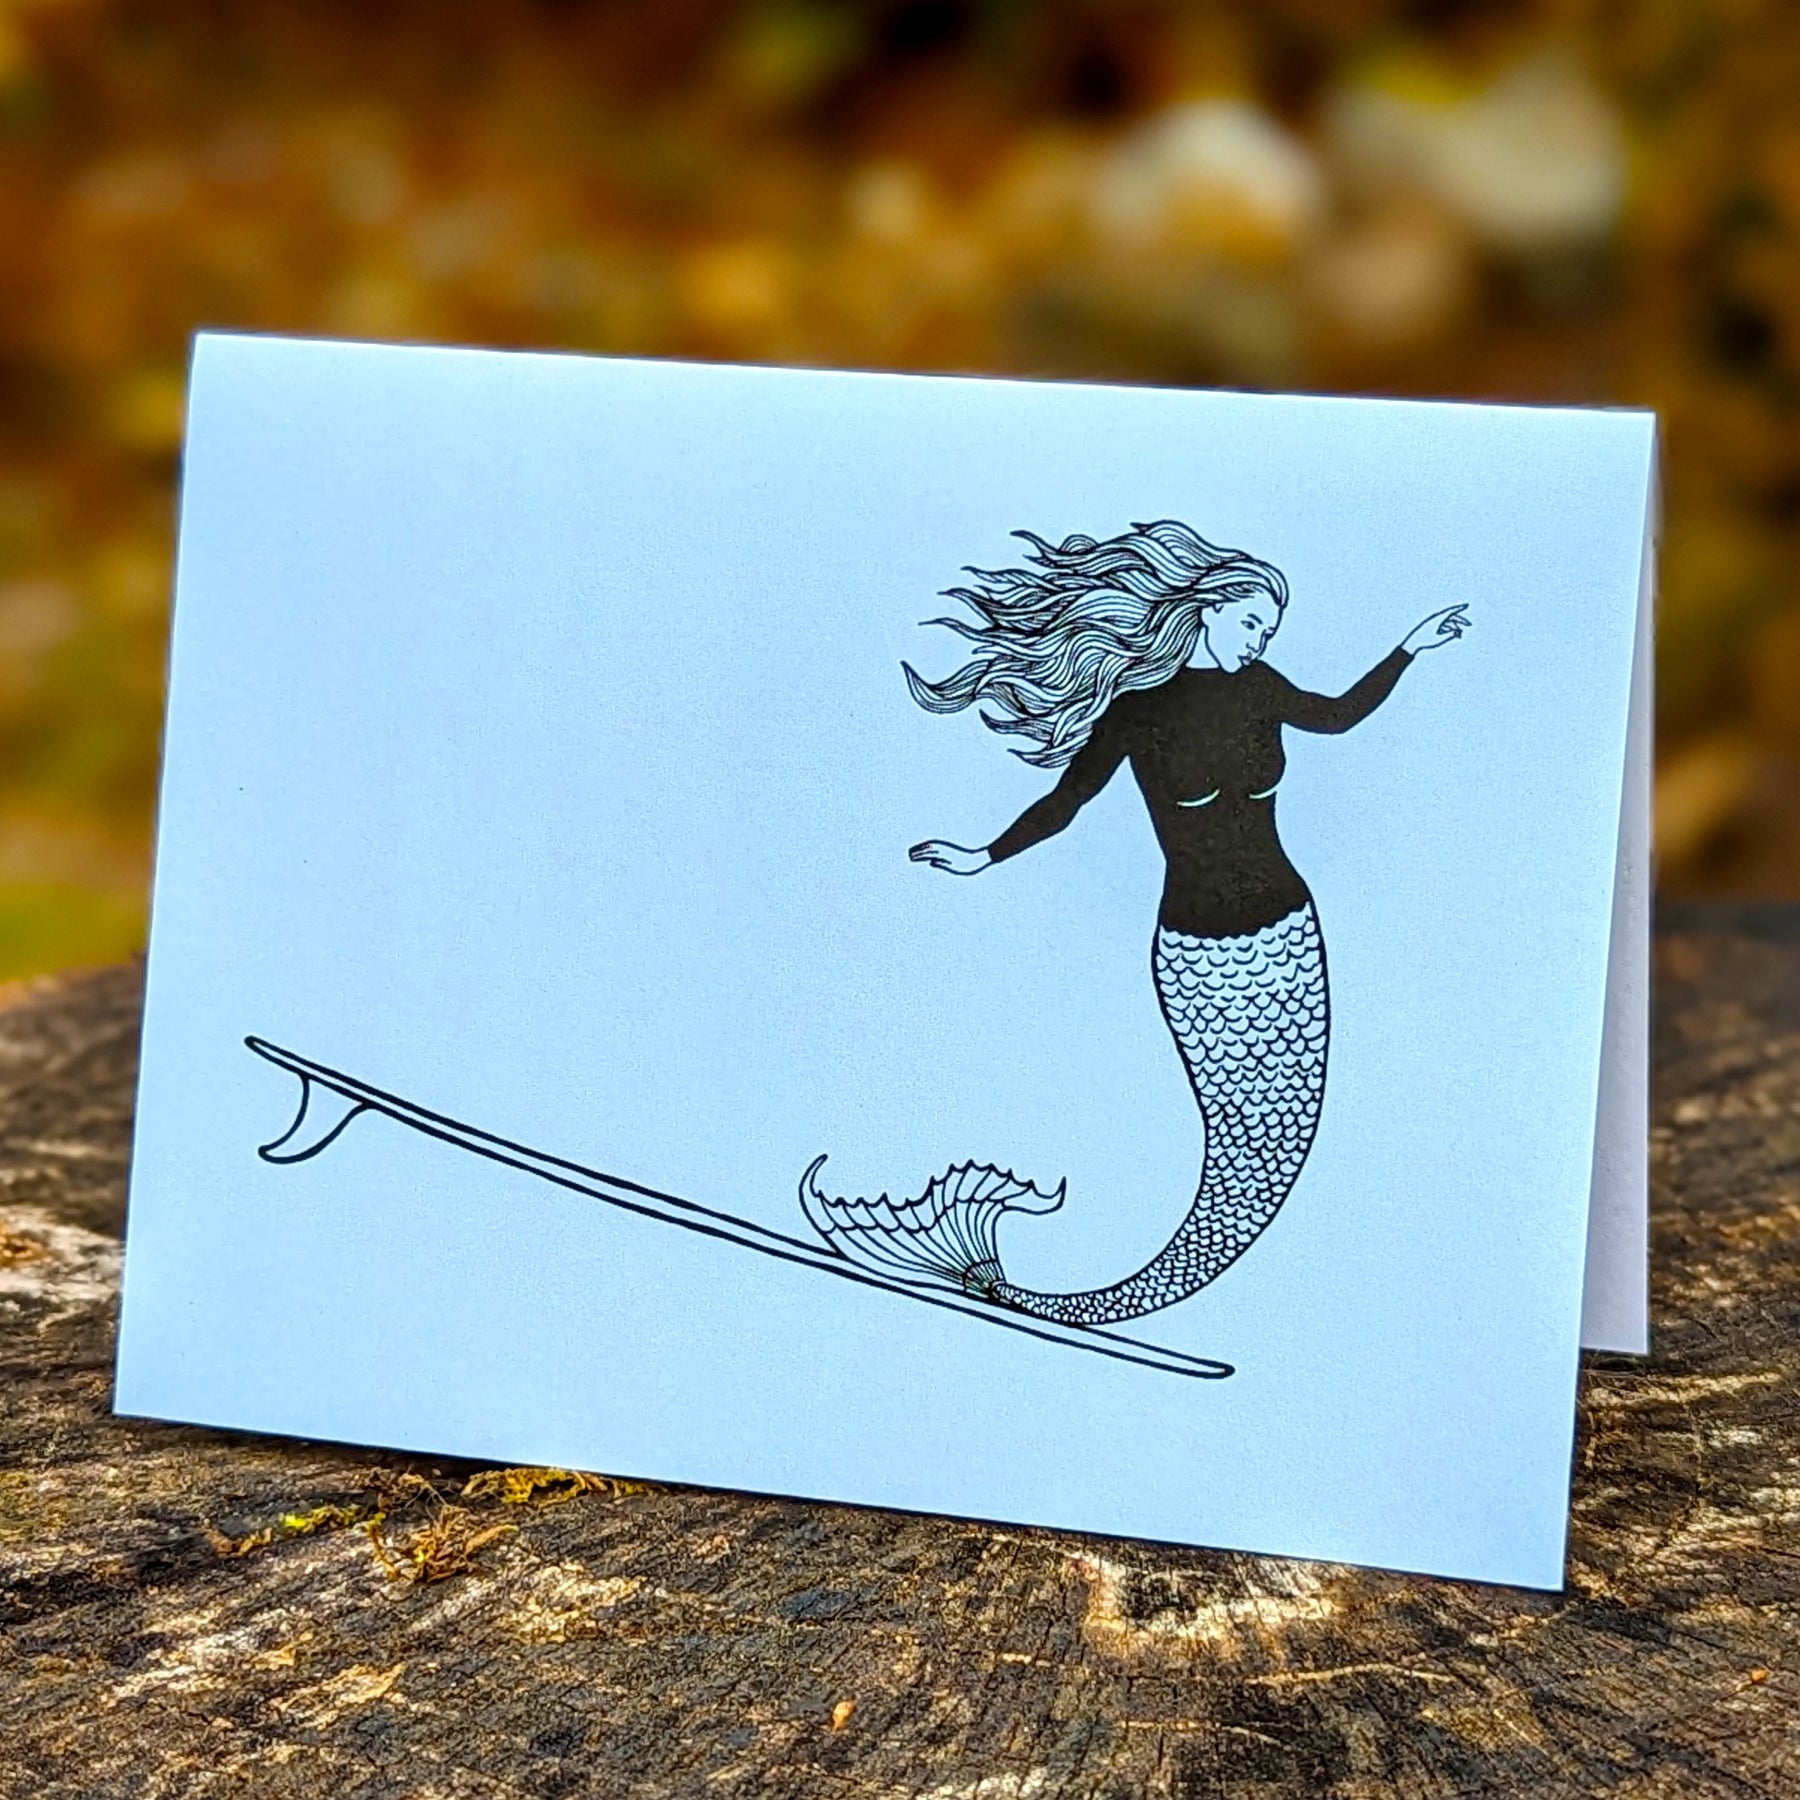 Westcoastees Surfing Mermaid Art Card - Westcoastees Surfing Mermaid Art Card -  - House of Himwitsa Native Art Gallery and Gifts